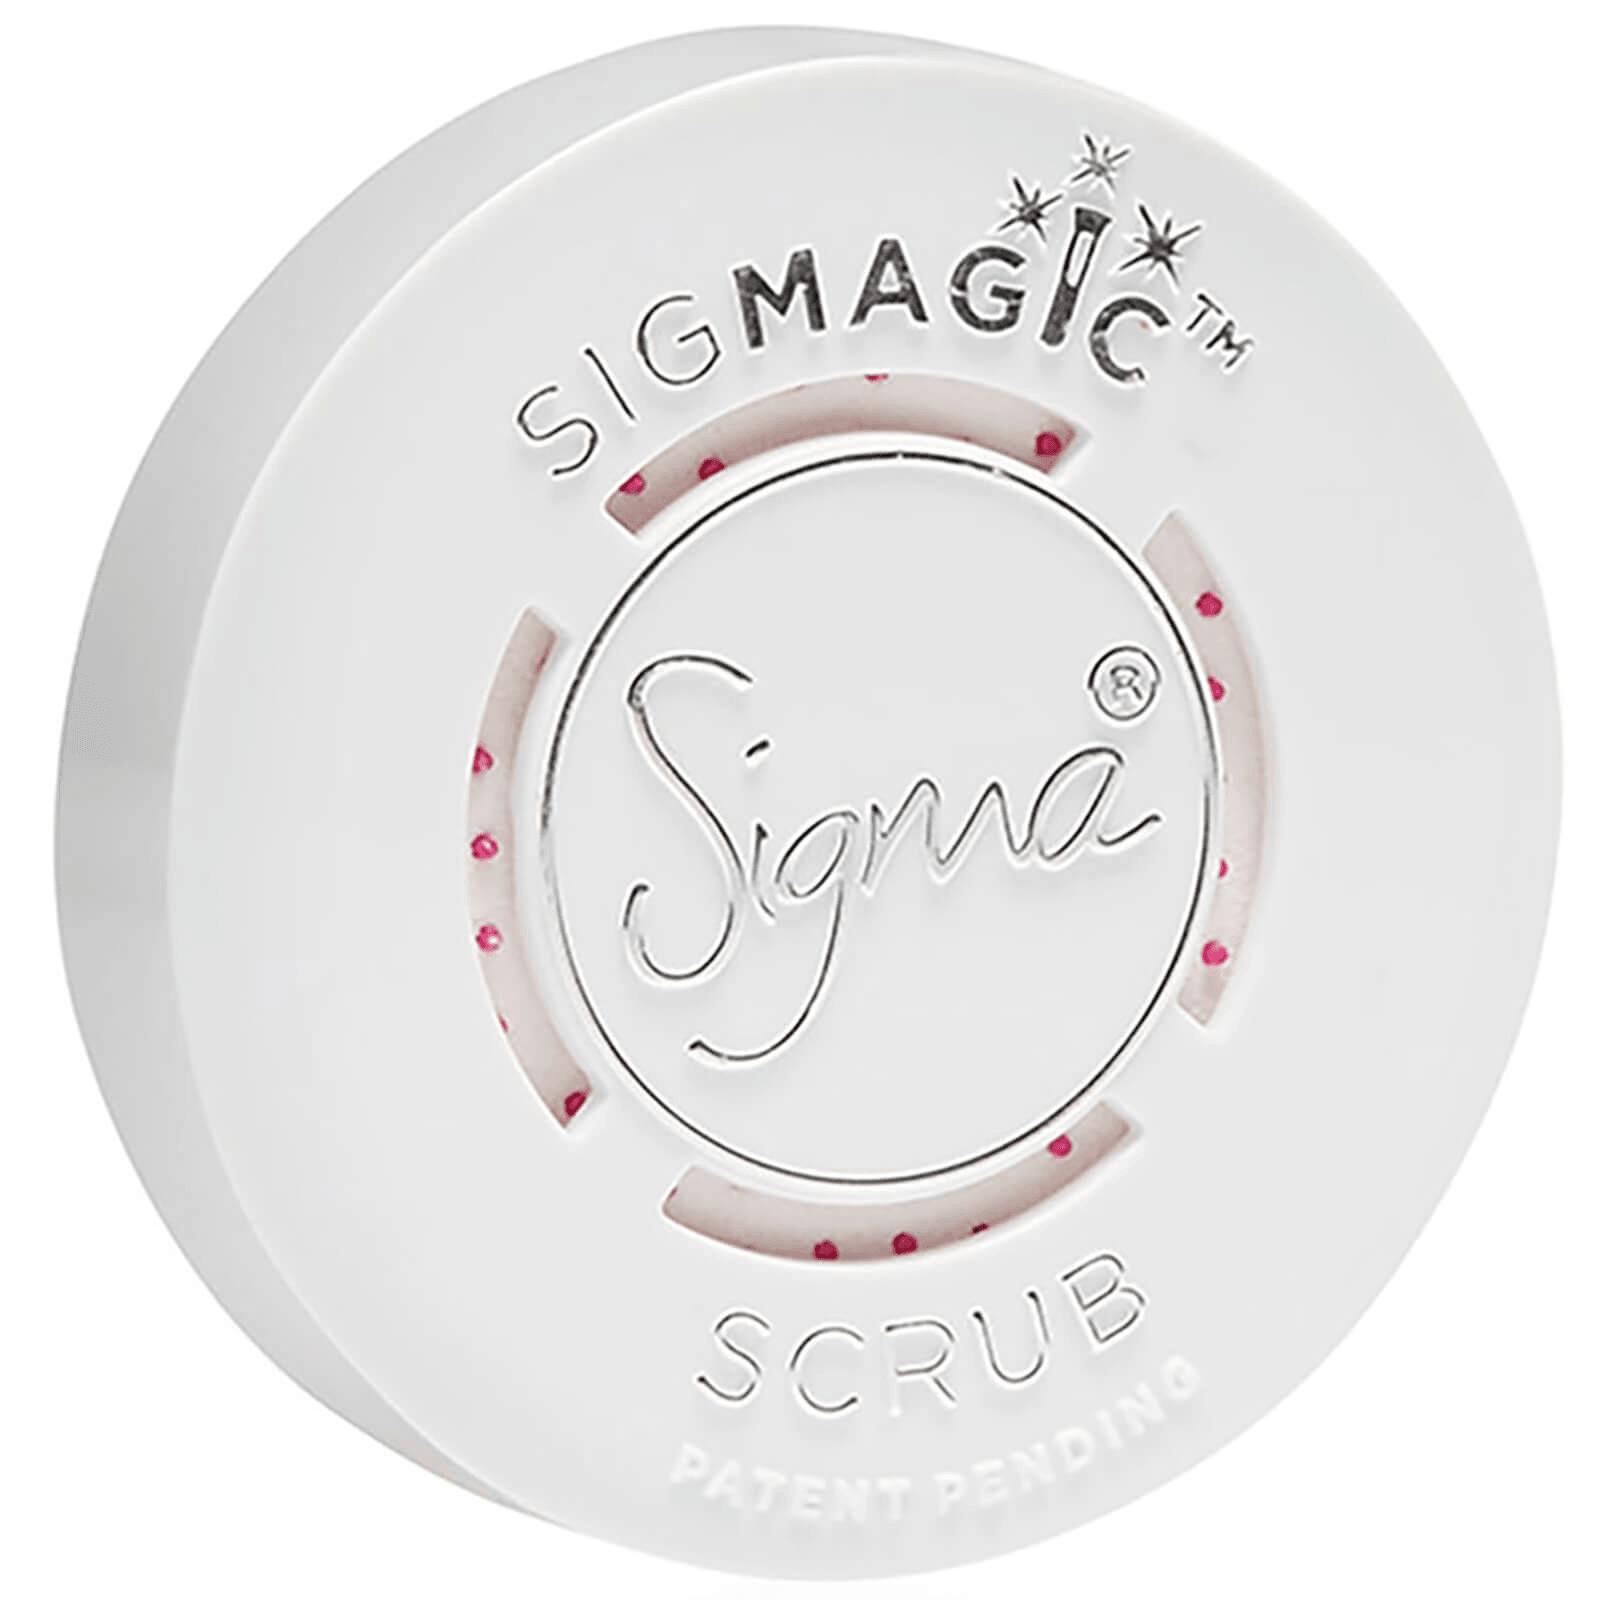 Sigmagic™ Scrub by Sigma Beauty  Read Reviews & Shop Online – Socialite  Beauty